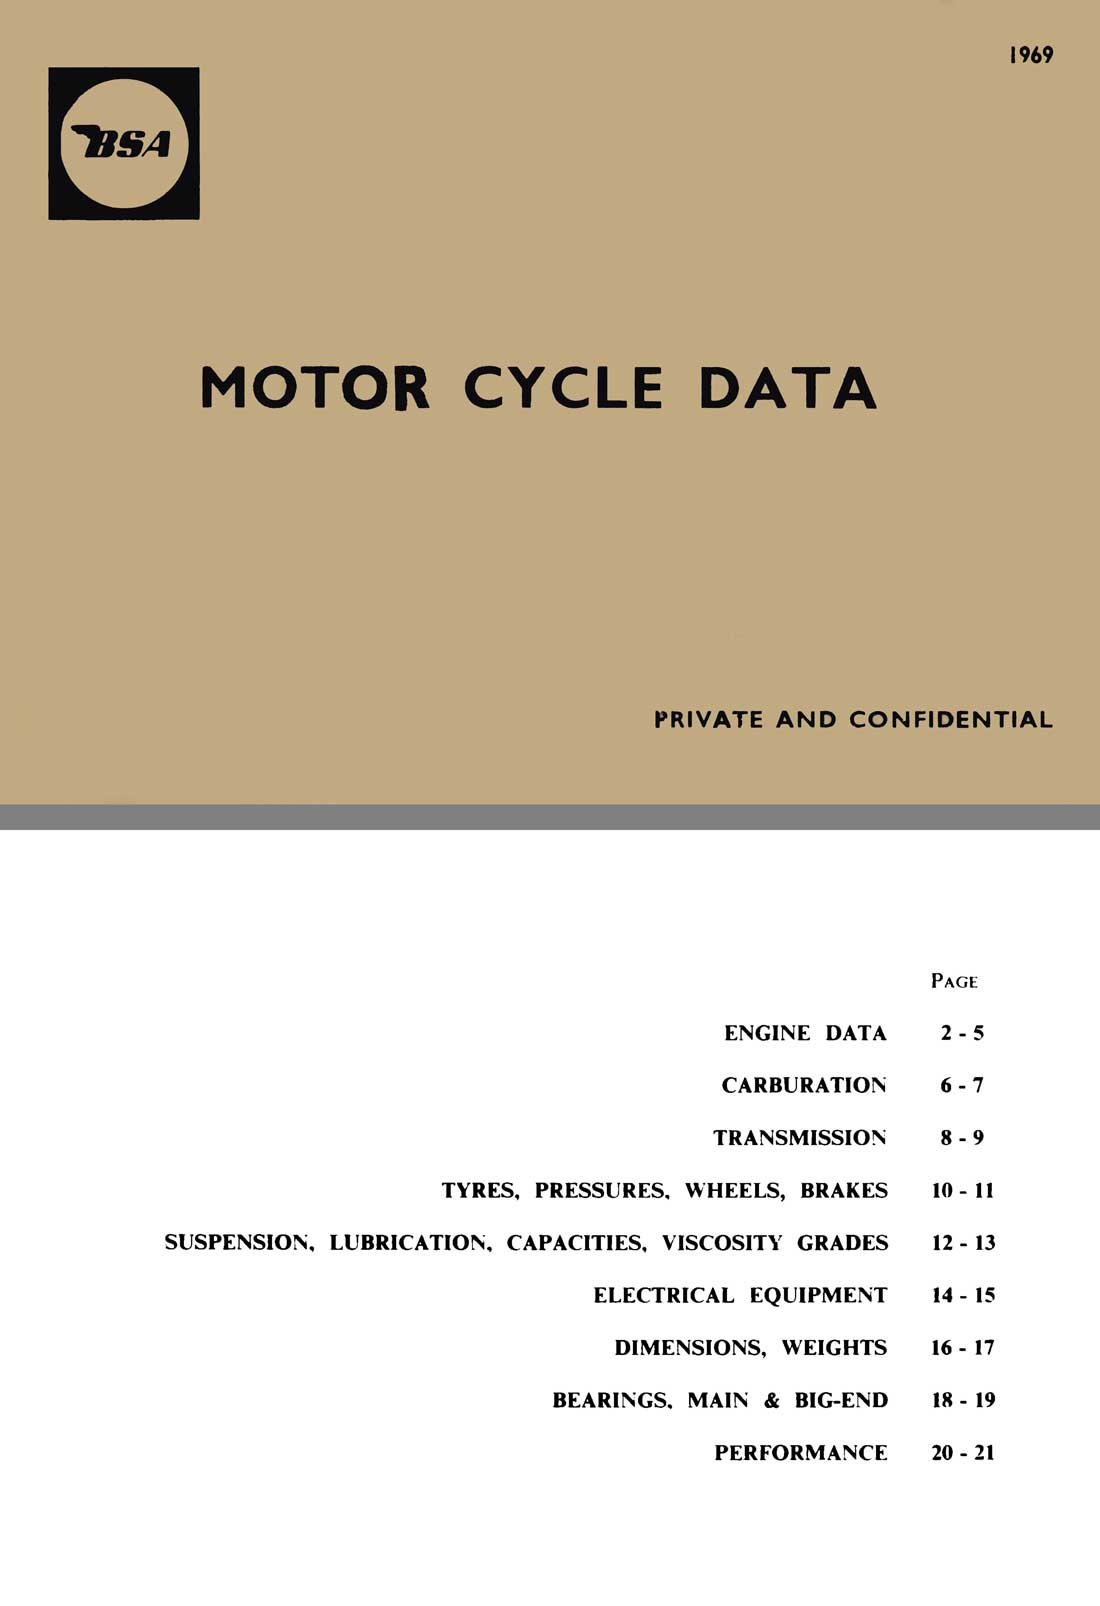 BSA Motor Cycle Data 1969 Catalog